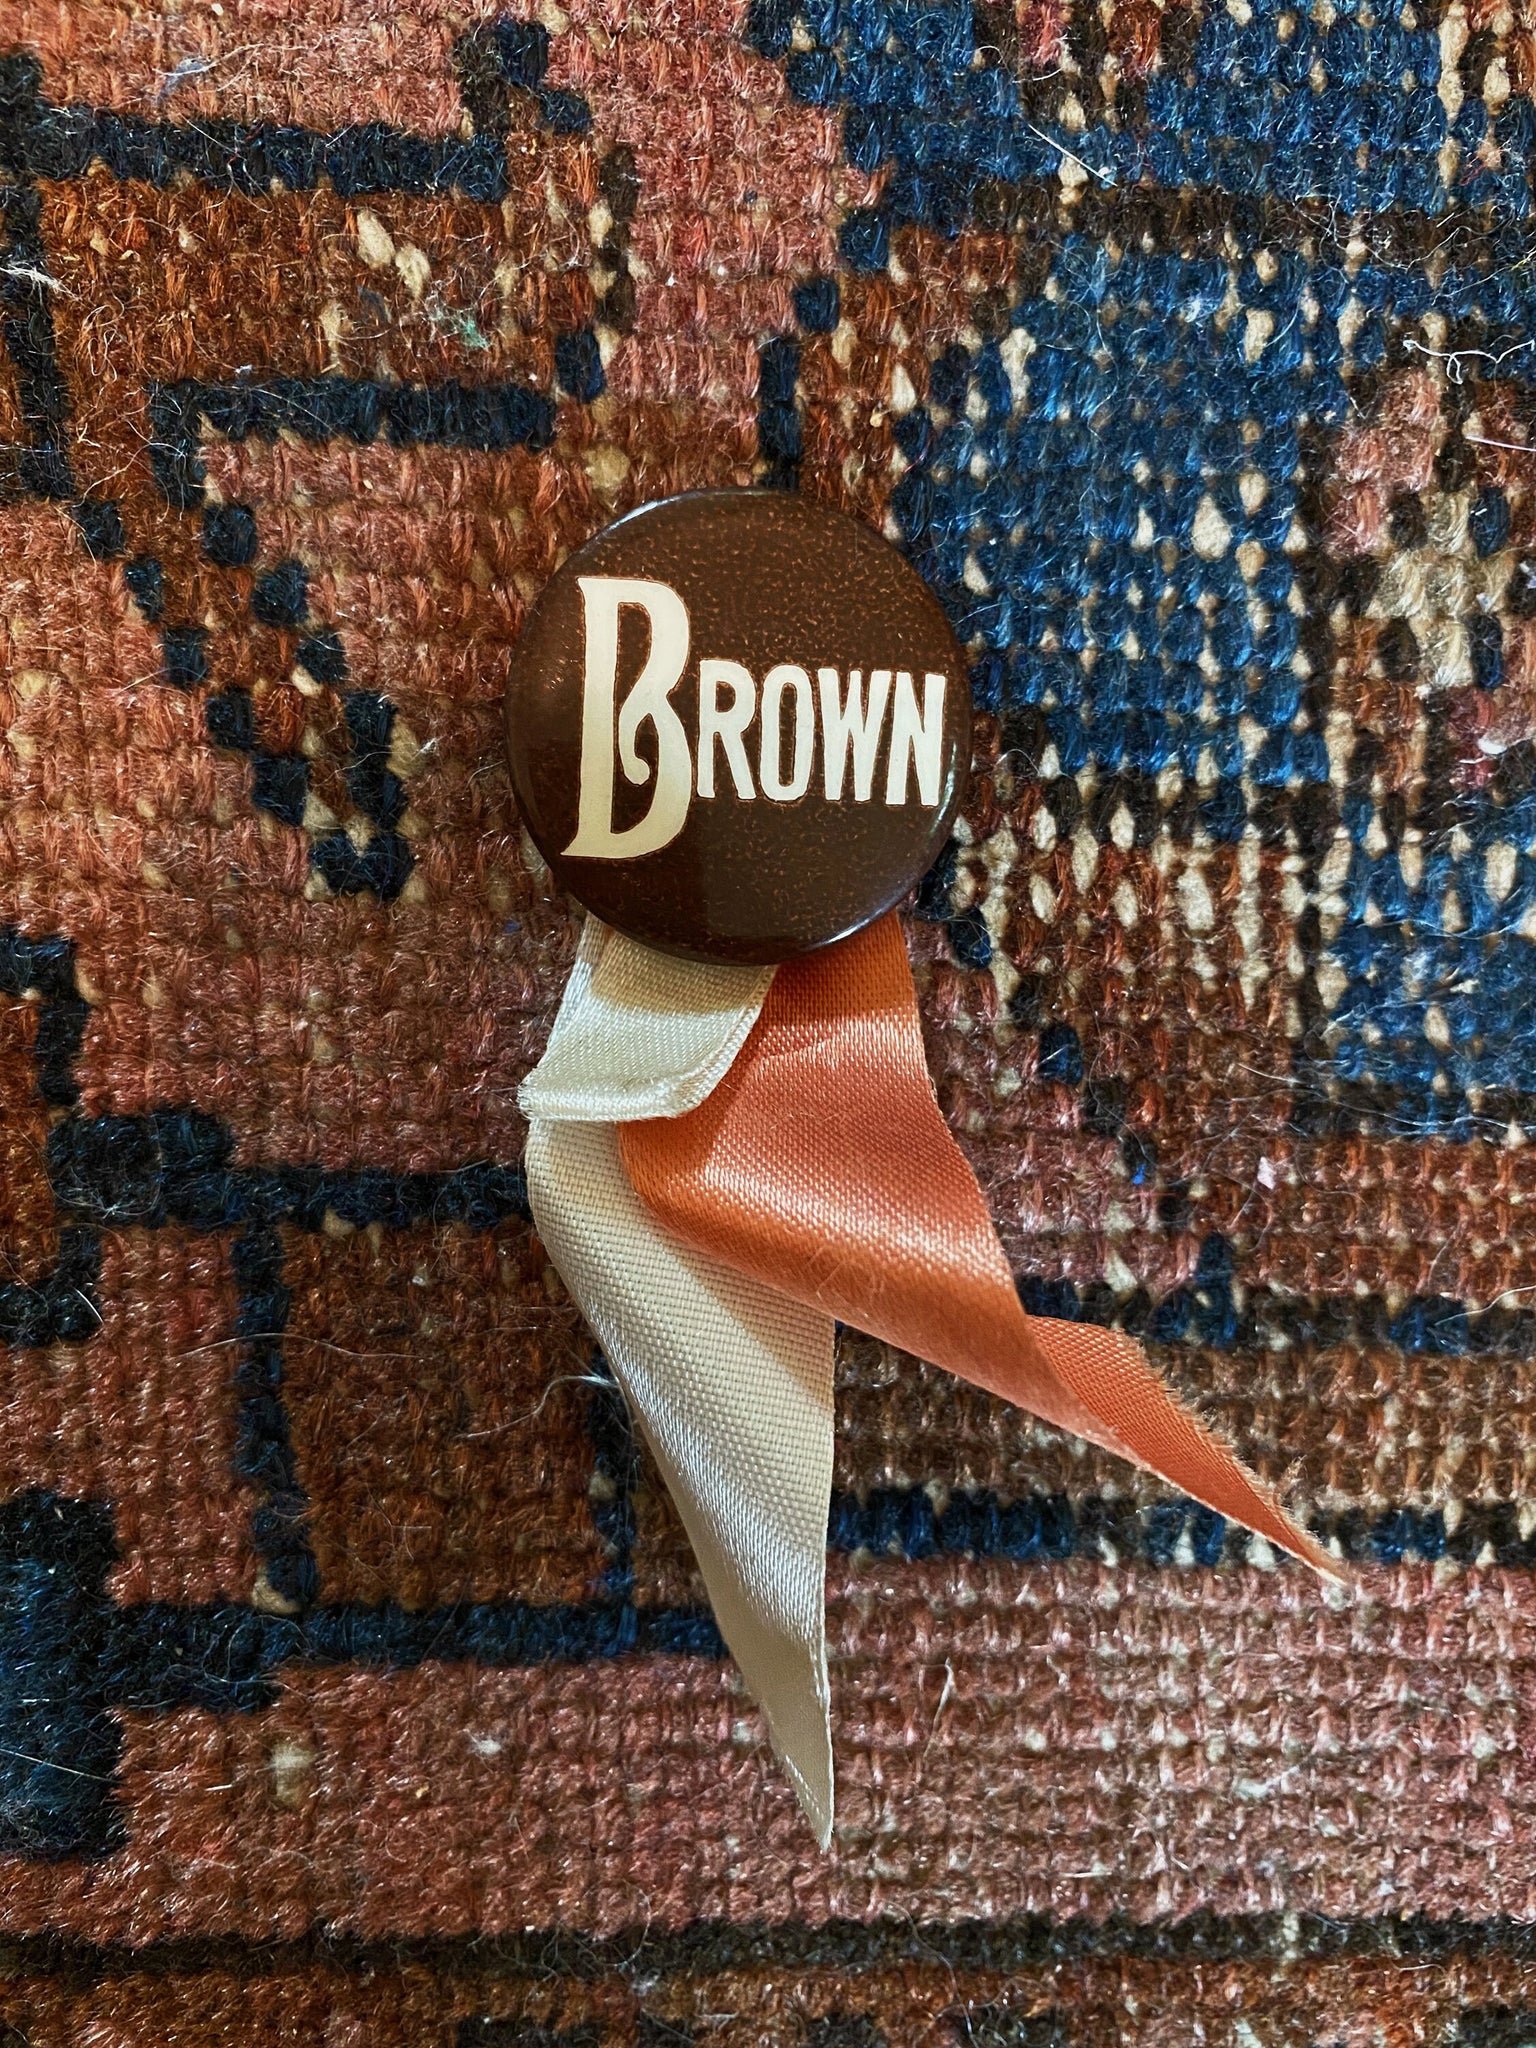 1950's Brown University Pinback Button